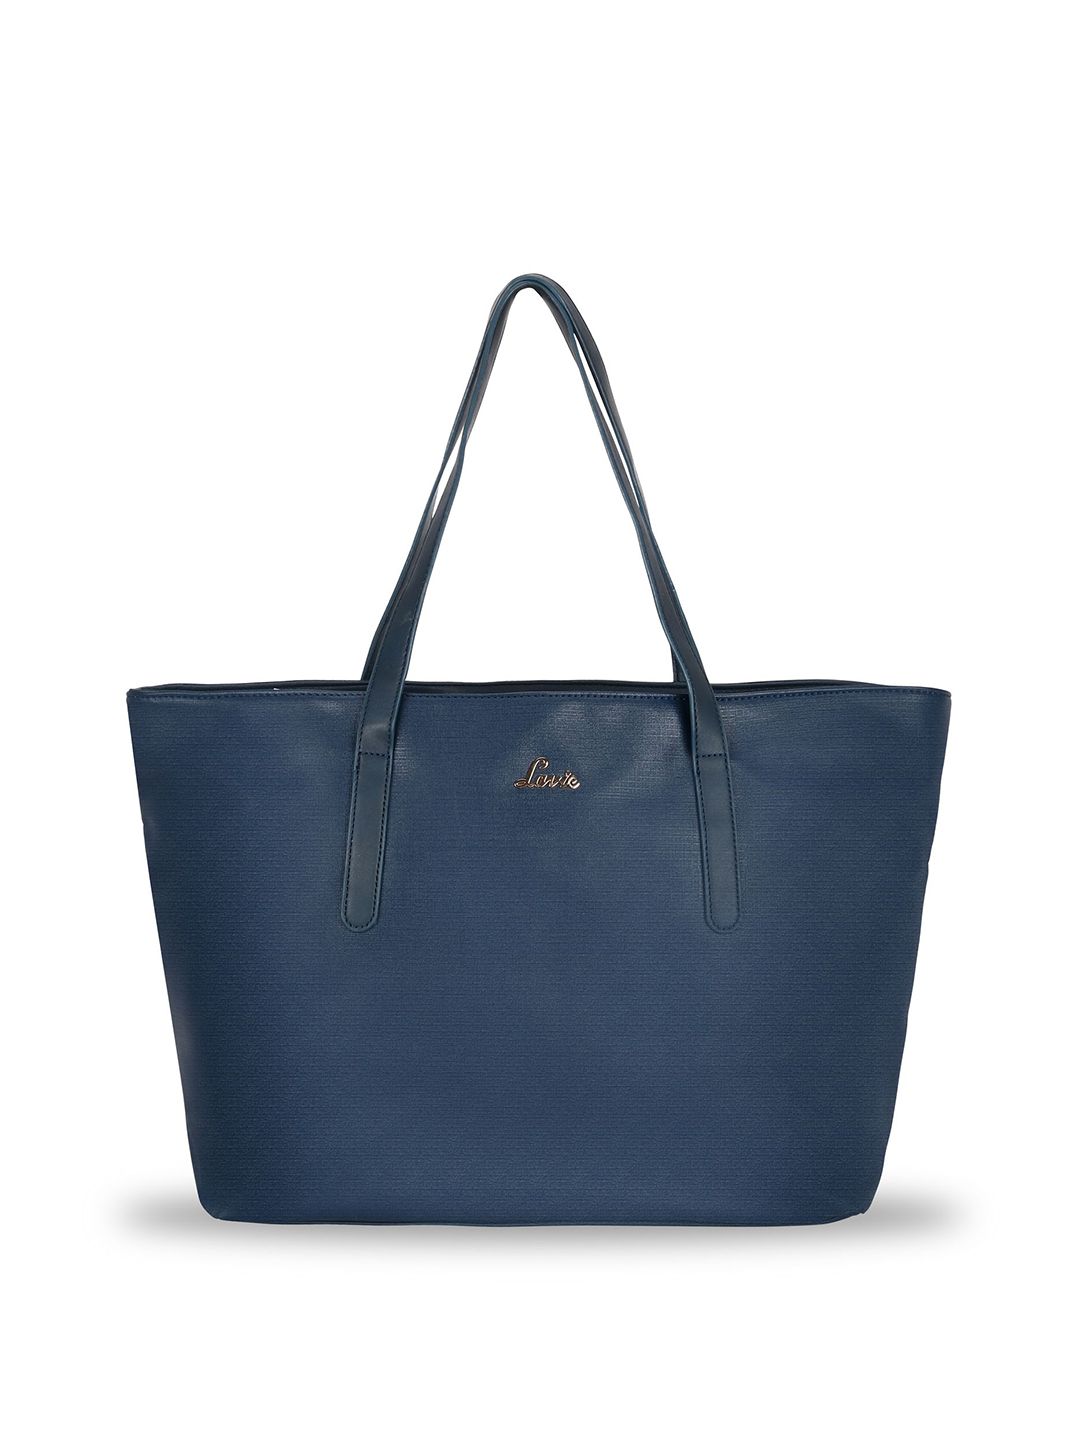 Lavie Blue Solid Shoulder Bag Price in India